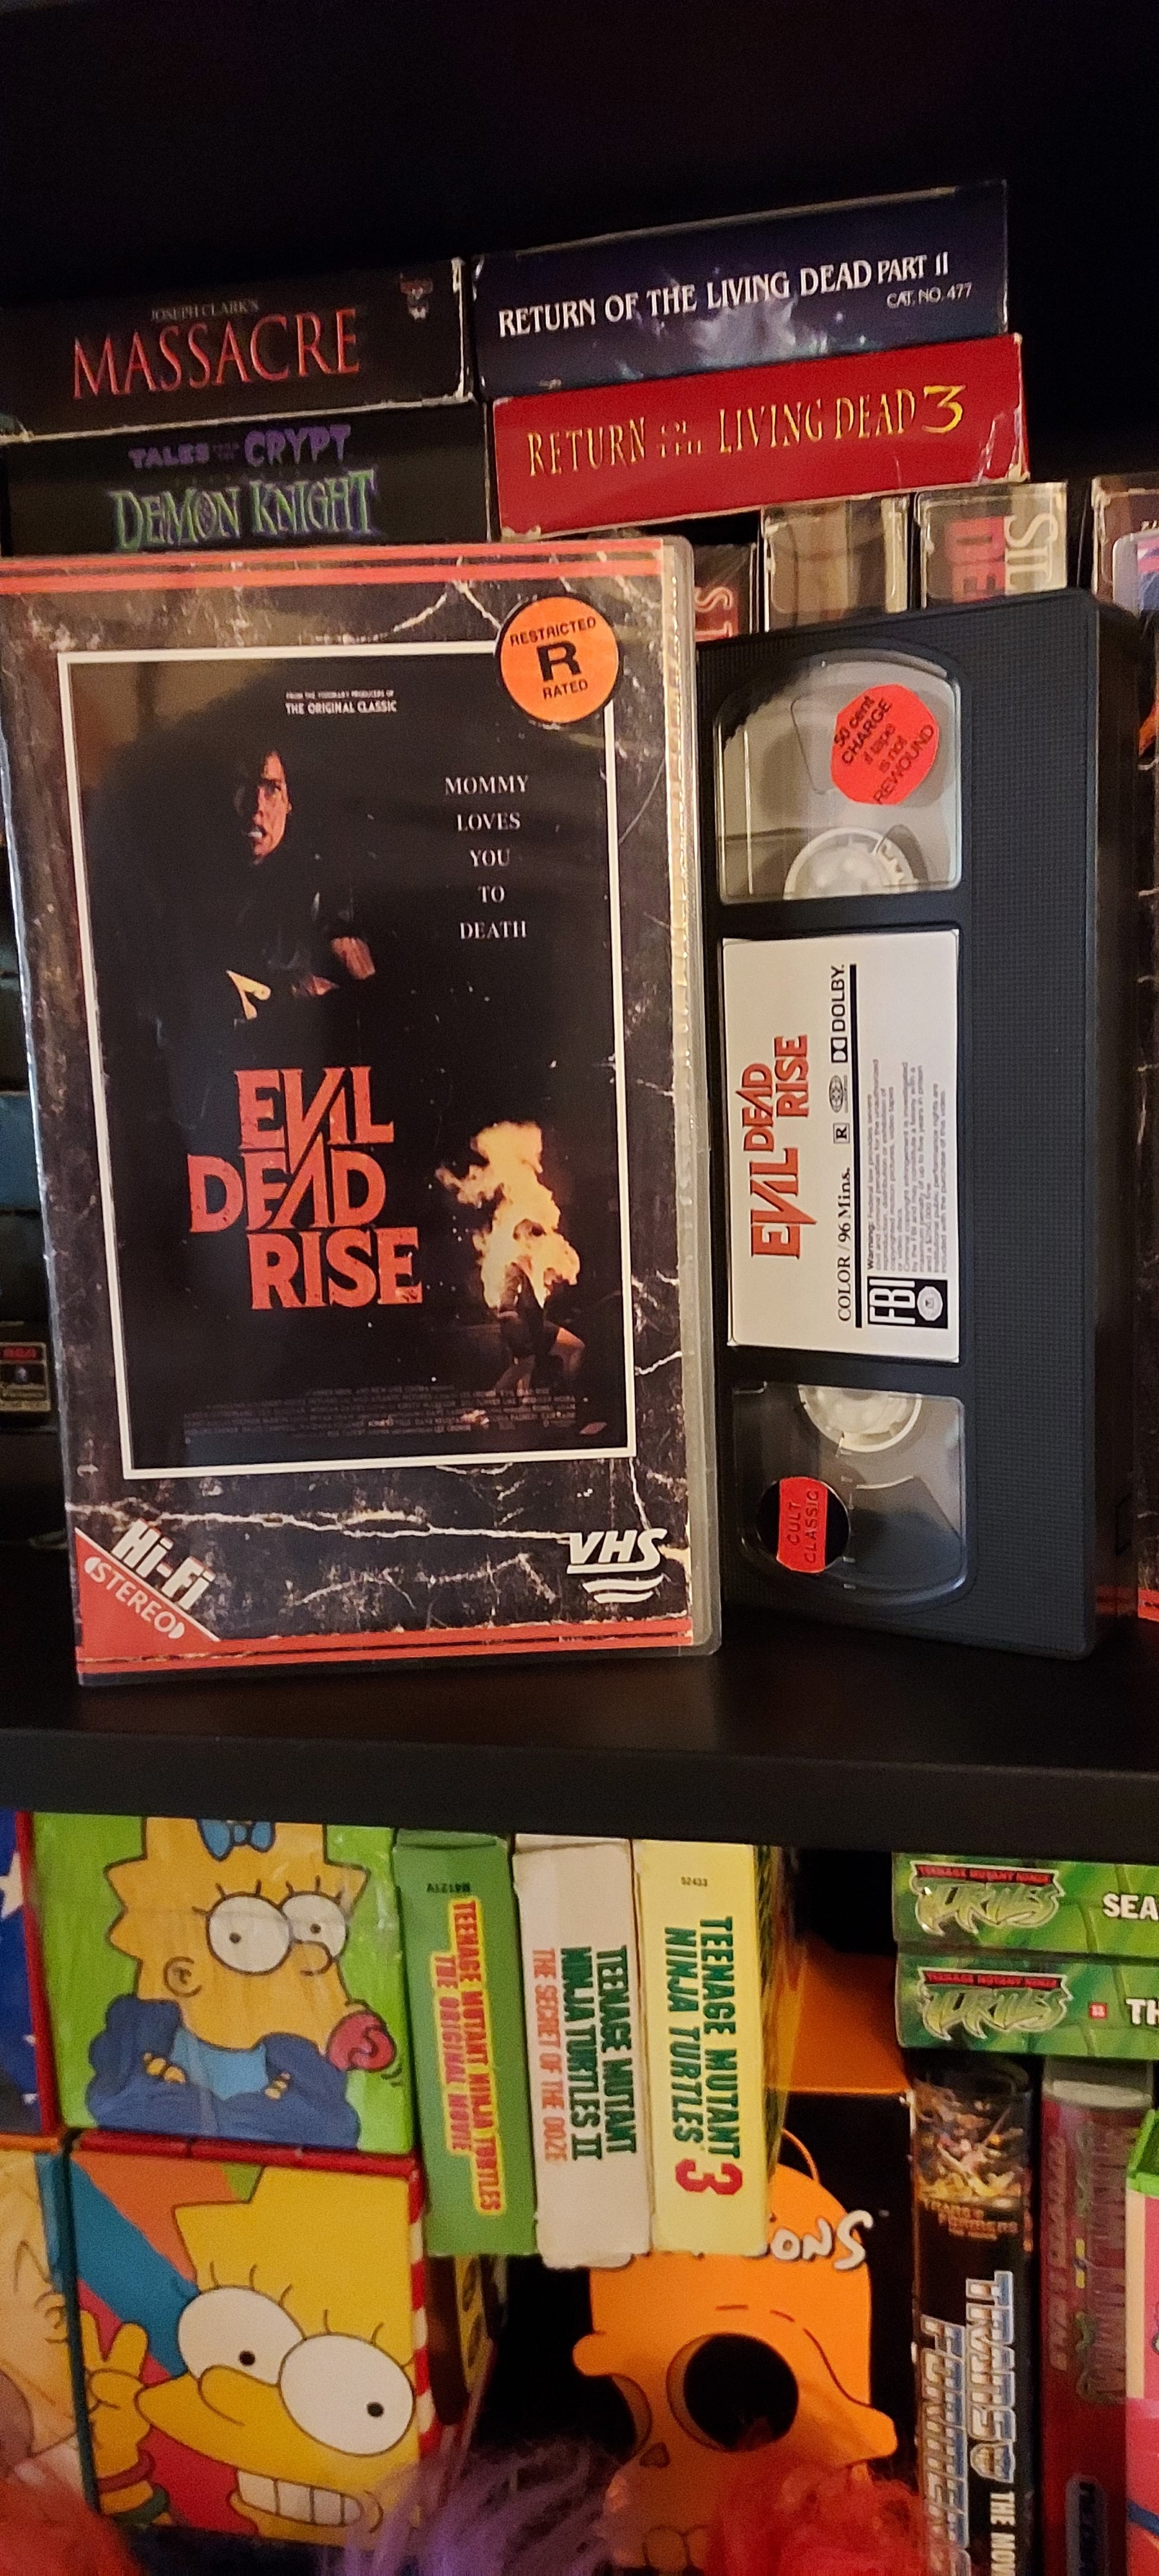 Buy Evil Dead: The Game - The Classics Bundle